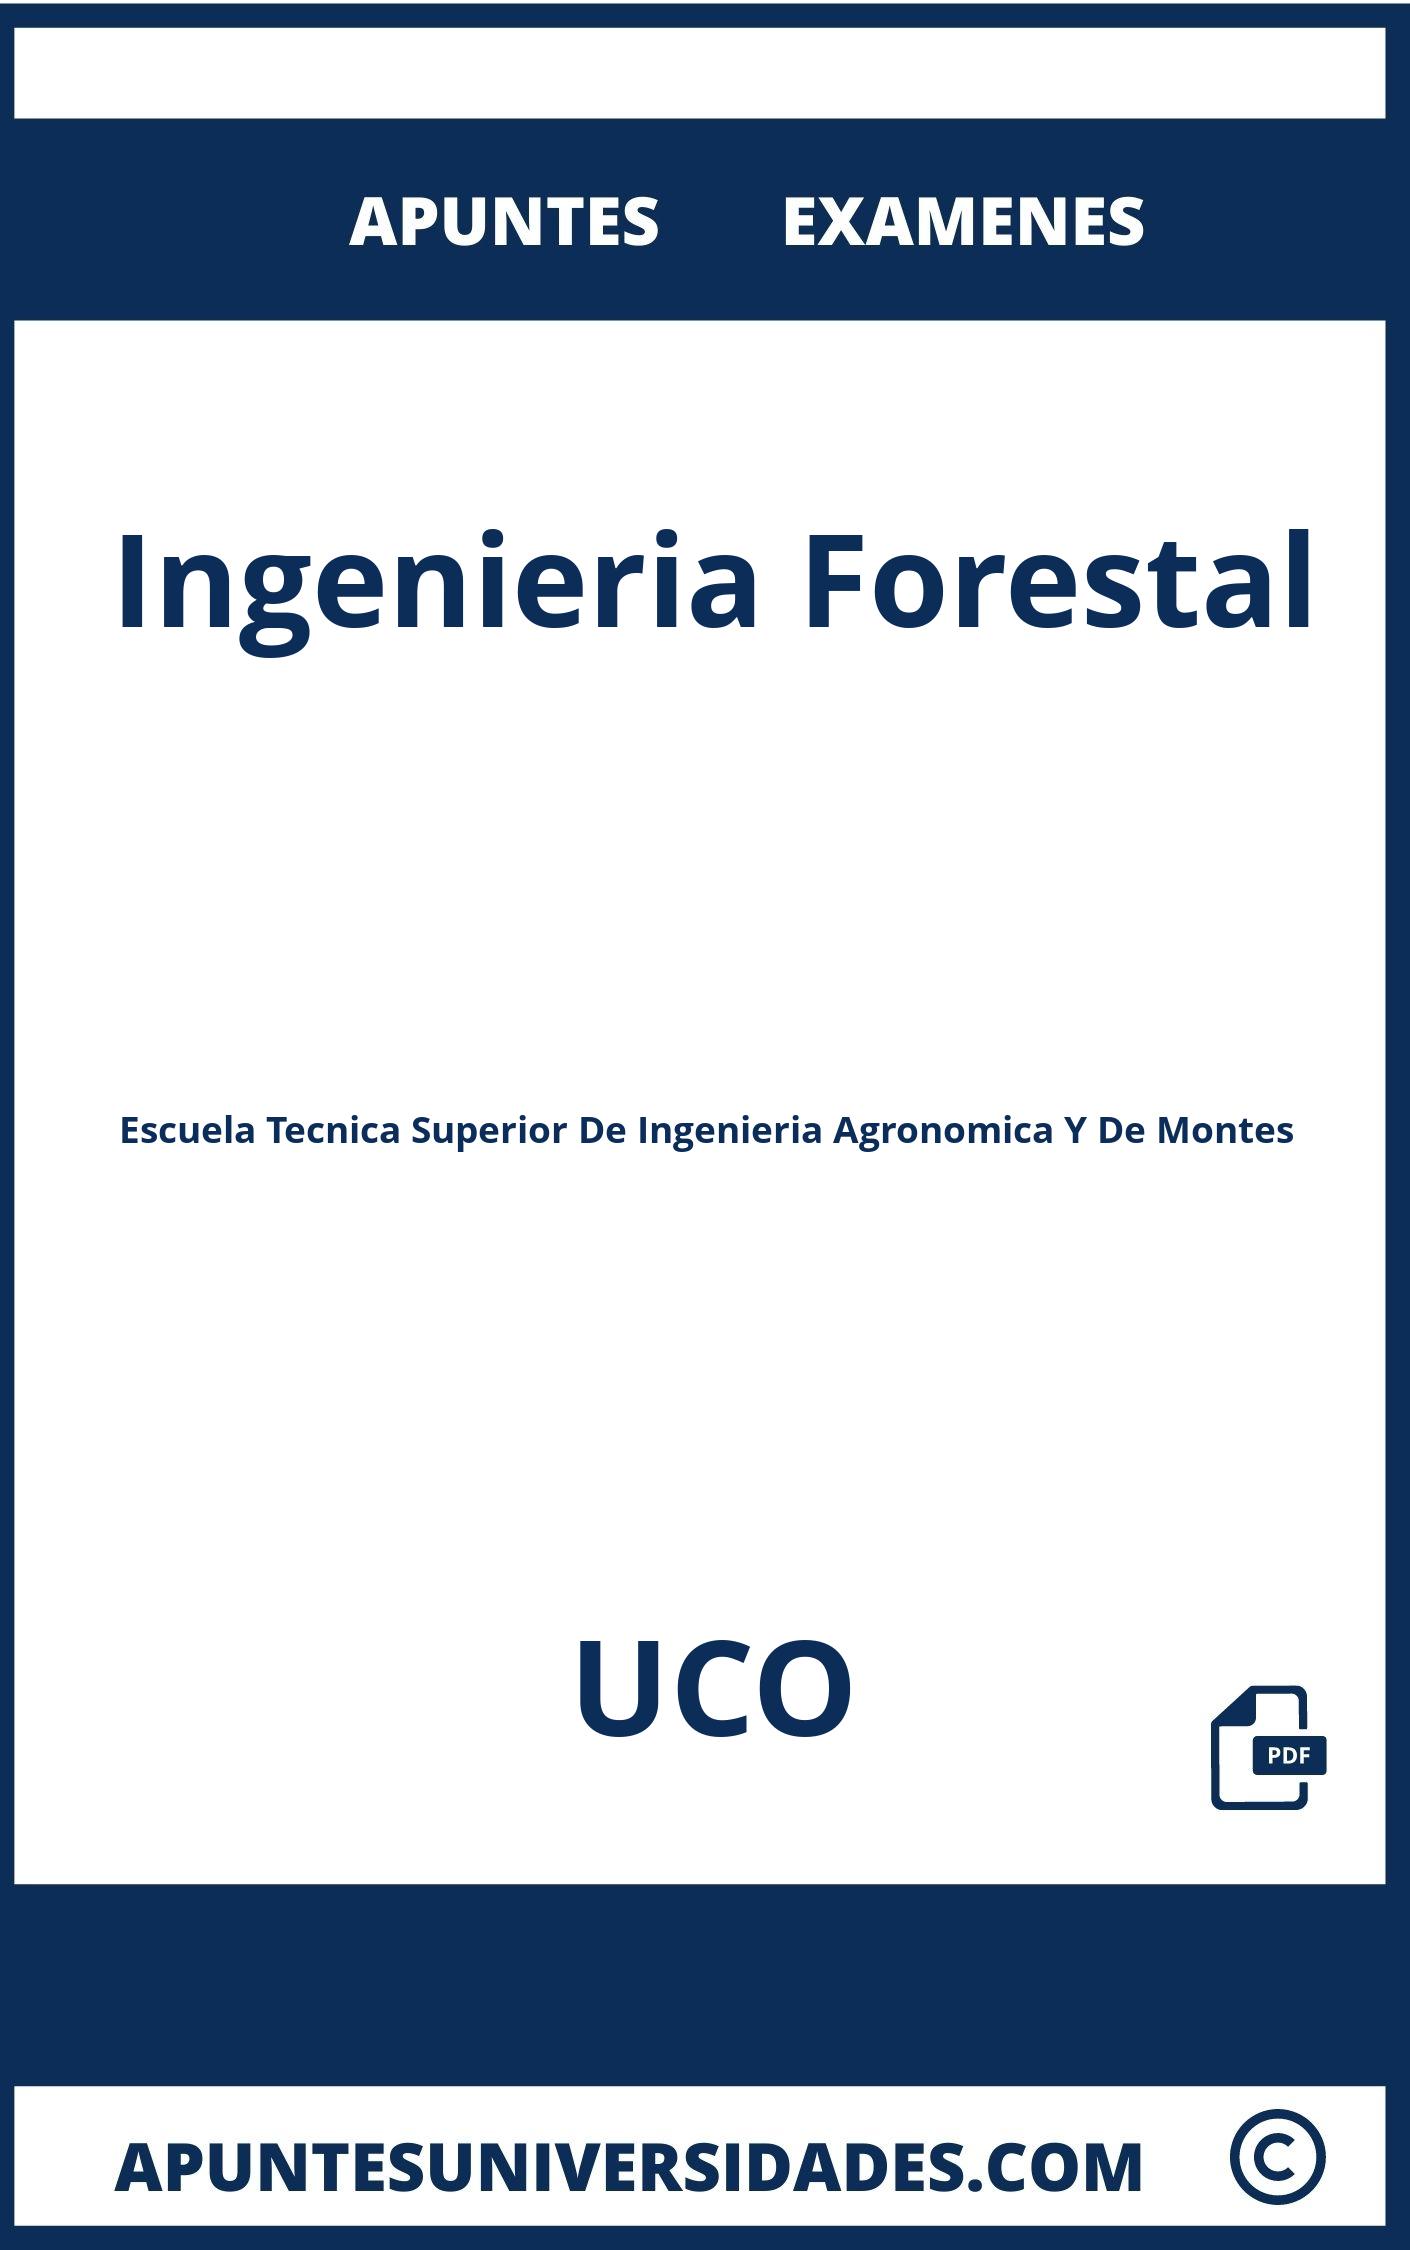 Apuntes y Examenes Ingenieria Forestal UCO